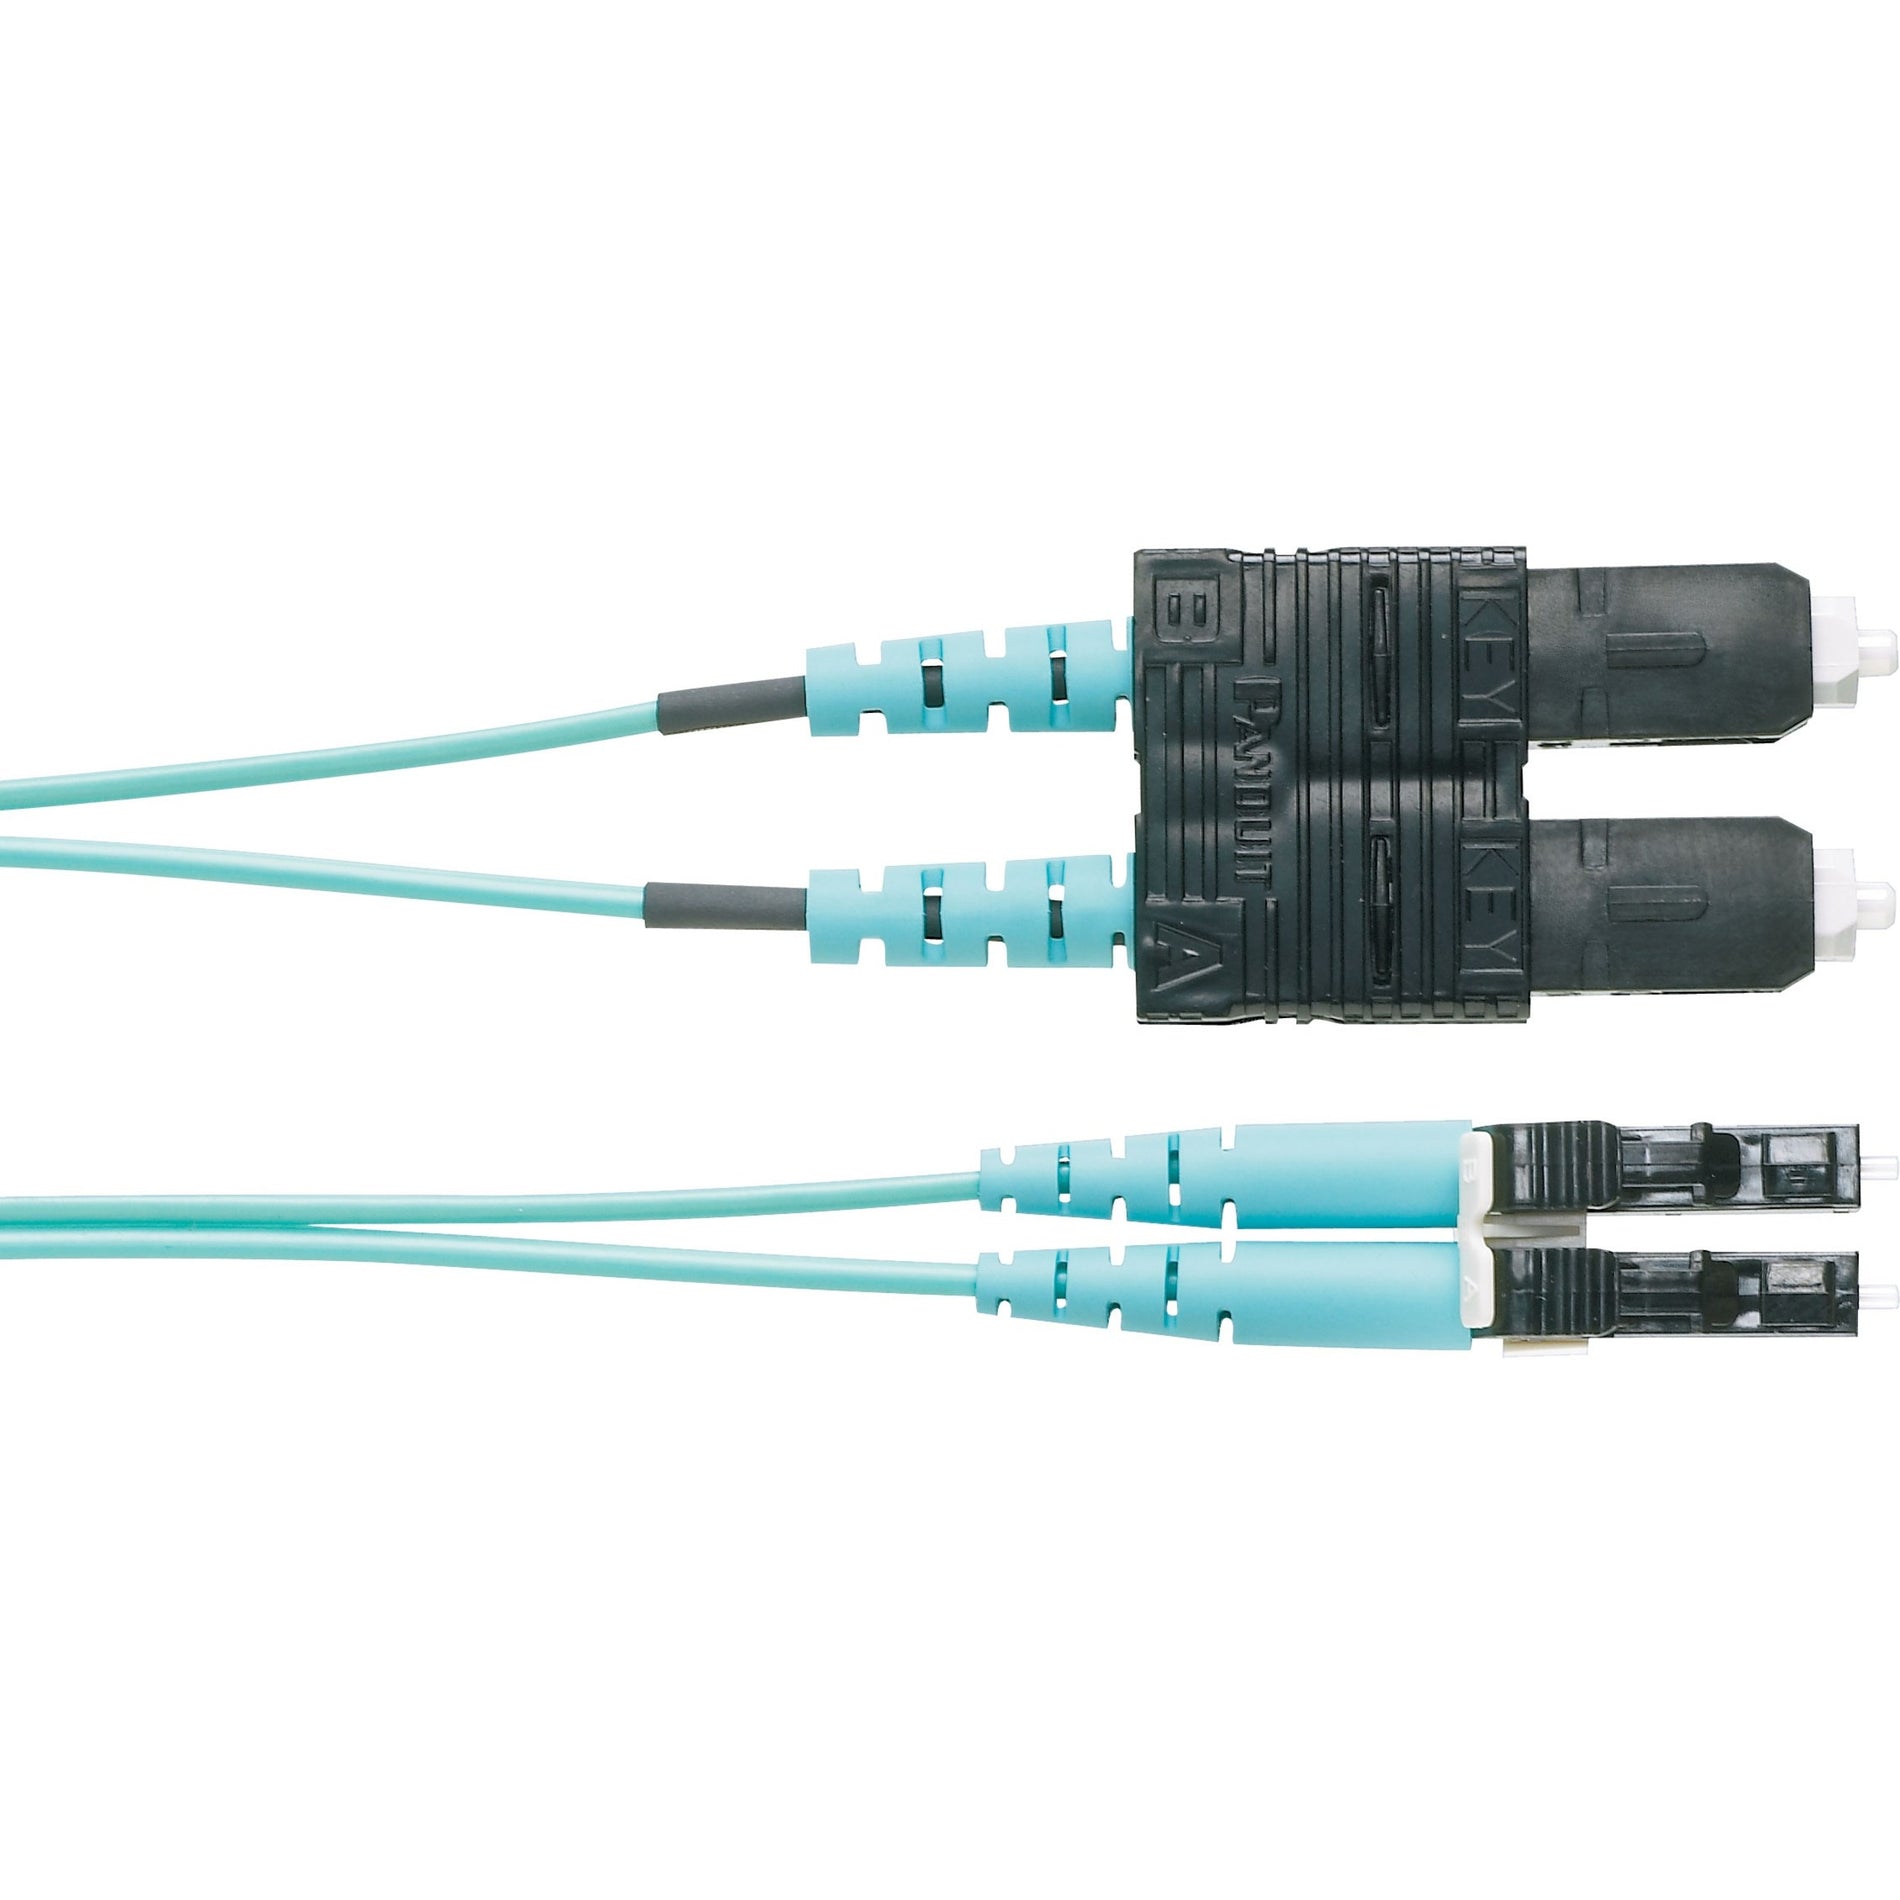 Panduit FZ2ERLNSNSNM003 Fiber Optic Duplex Network Cable, Multi-mode, 10 Gbit/s, 9.84 ft, Aqua